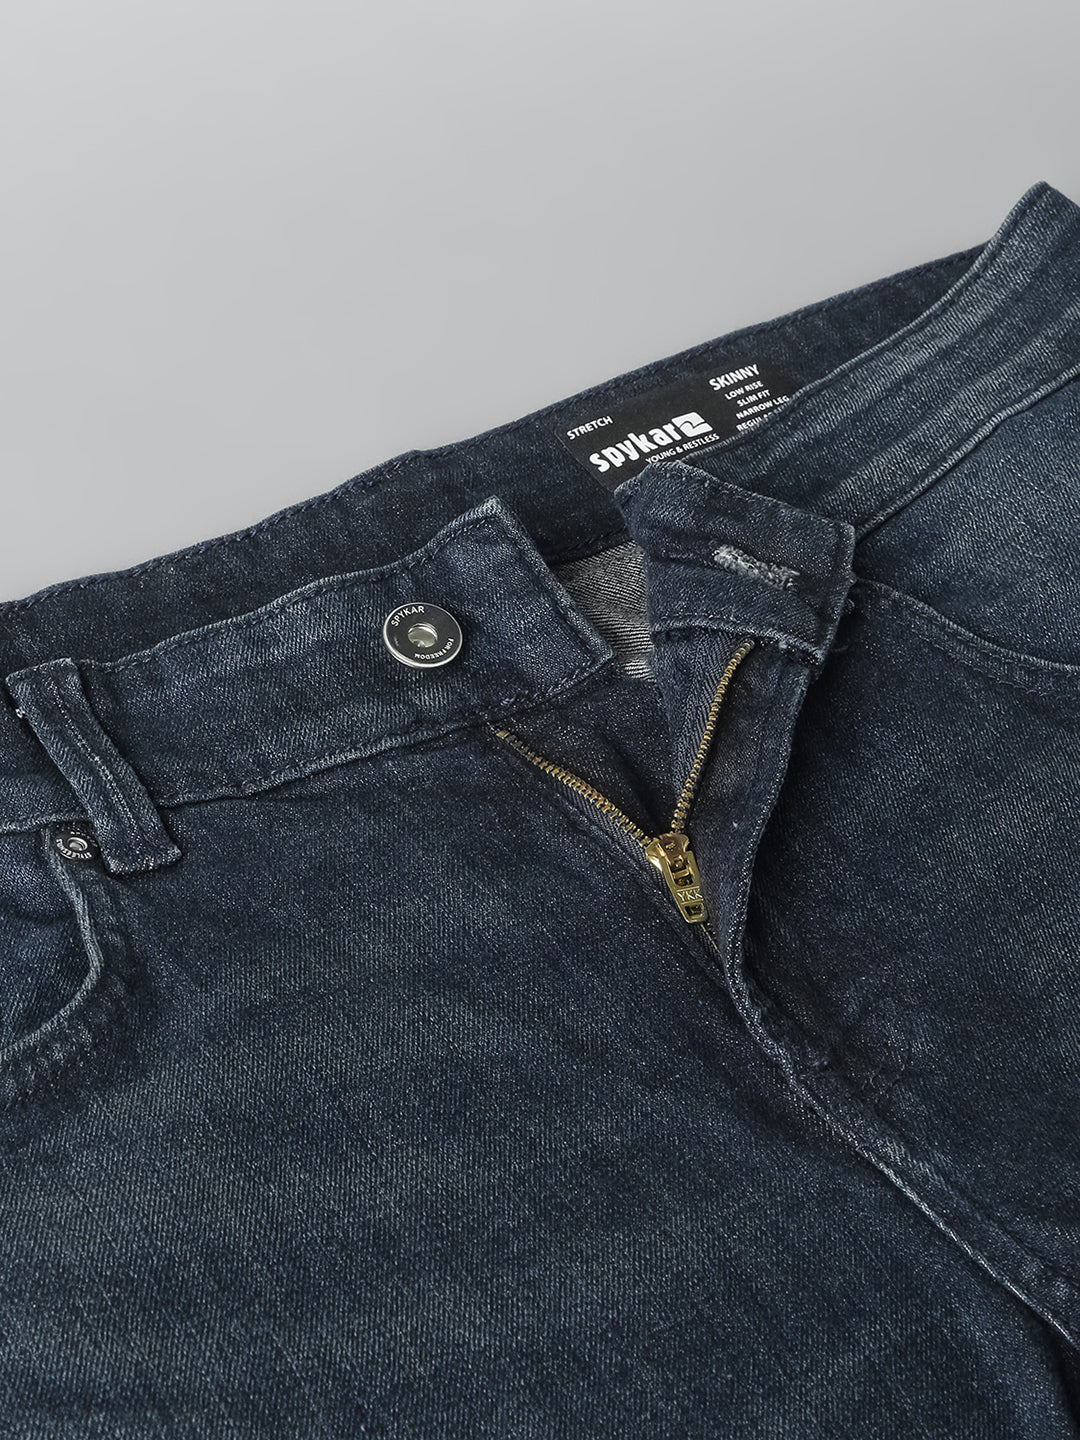 Spykar Limited Edition Dark Blue Slim Fit Narrow Length Low rise Clean Look Premium Stretchable Denim Jeans For Men (Skinny)